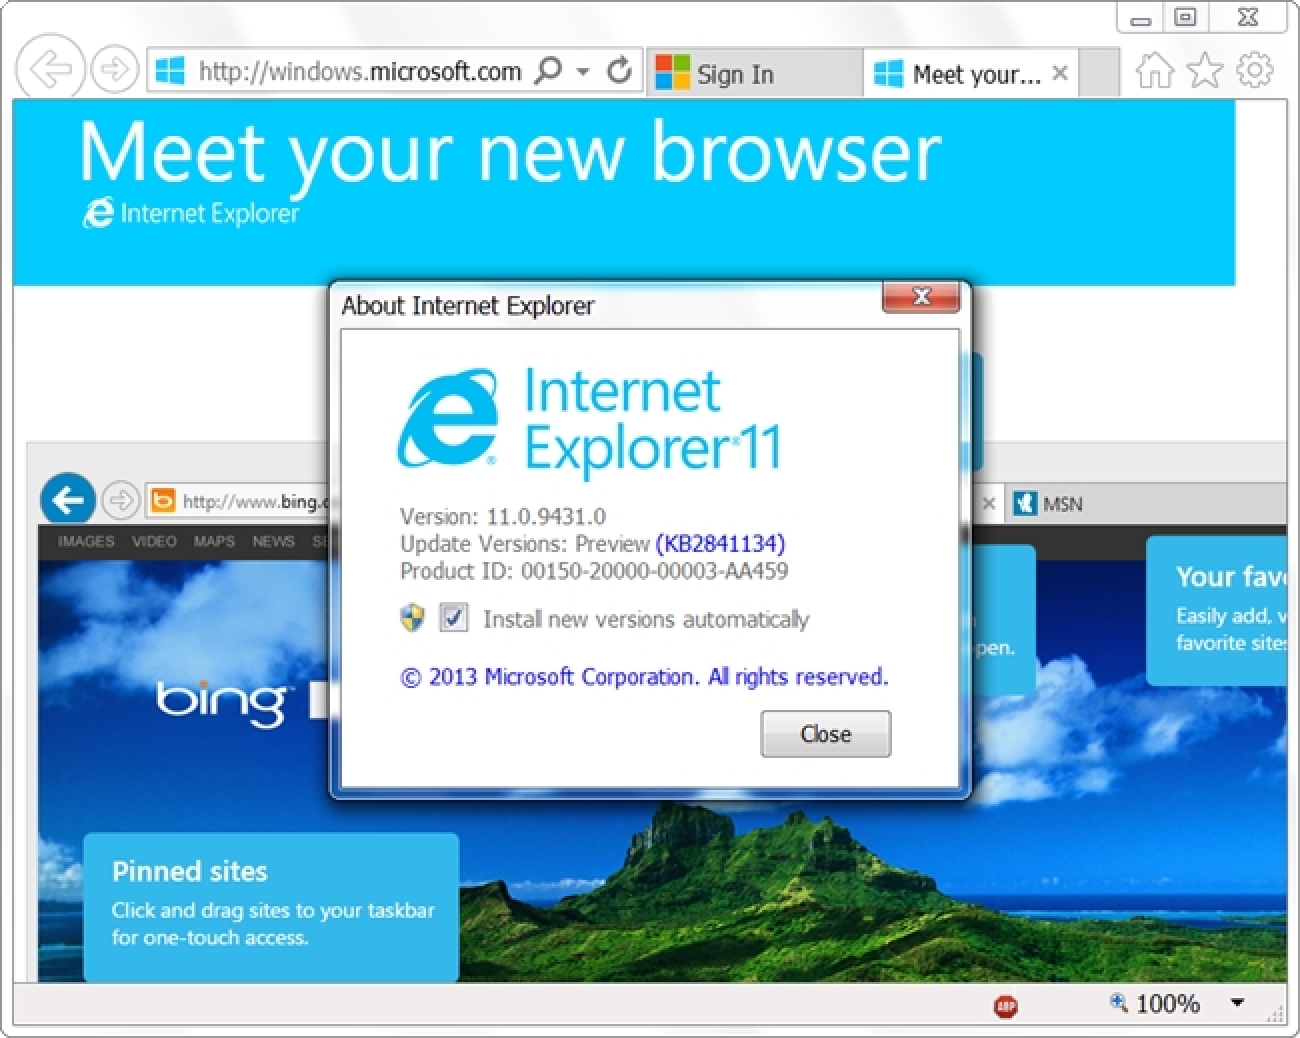 Браузер 11 версия. Интернет эксплорер. Эксплорер 11. Internet Explorer 11. Internet Explorer 11 браузер.